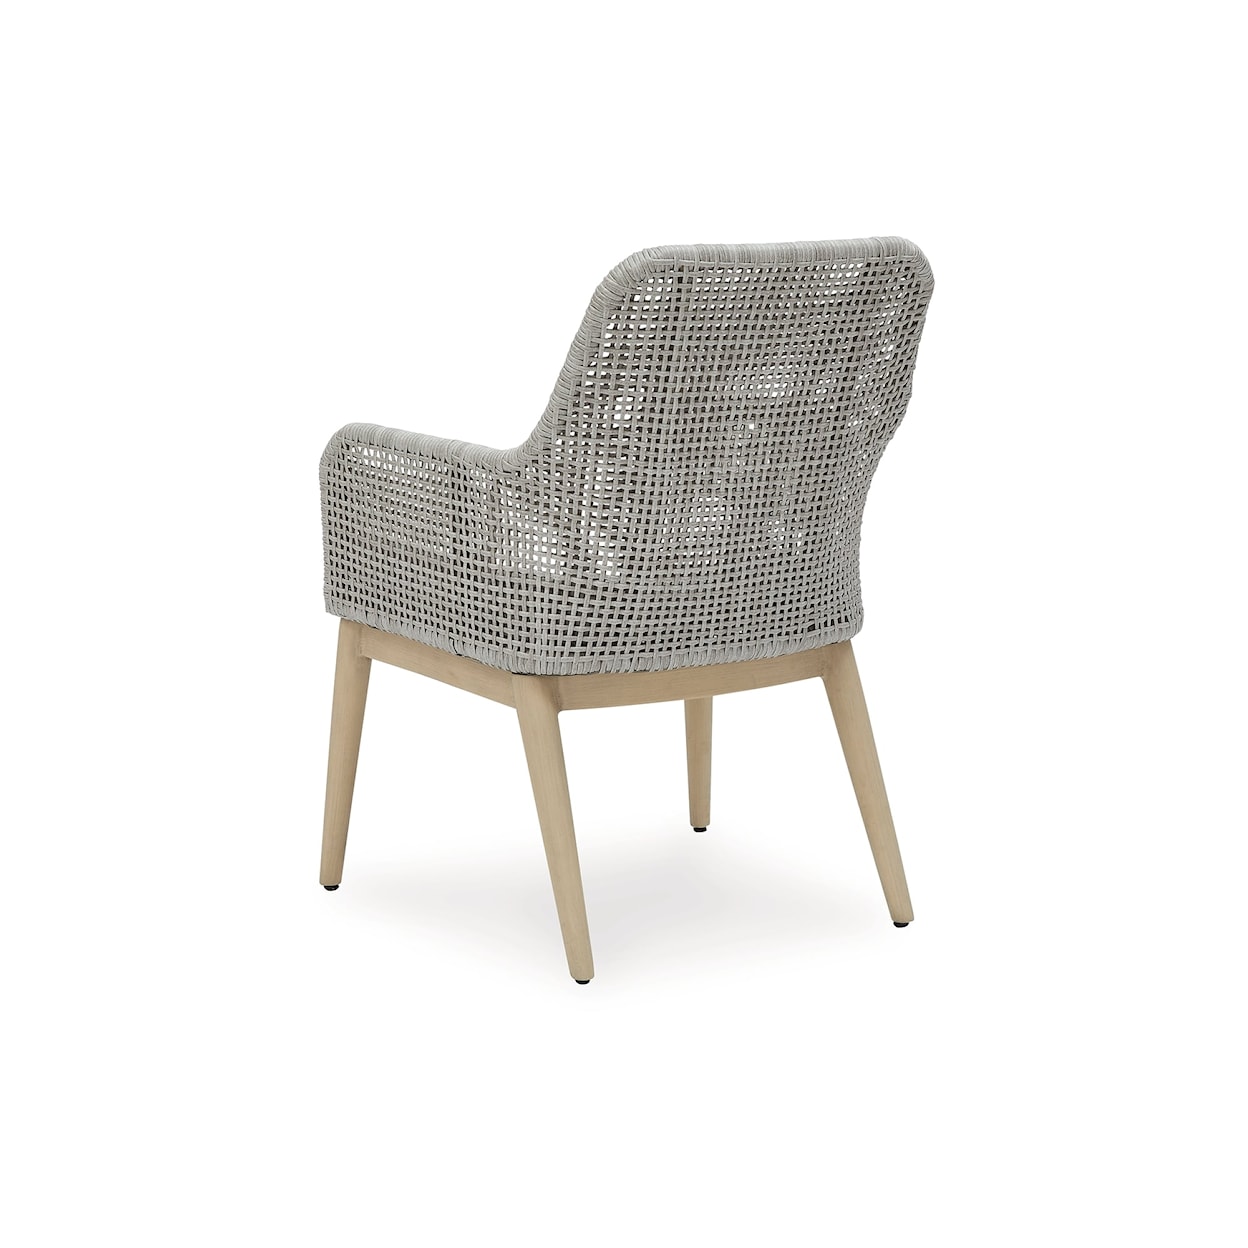 Ashley Furniture Signature Design Seton Creek Outdoor Dining Arm Chair (Set of 2)